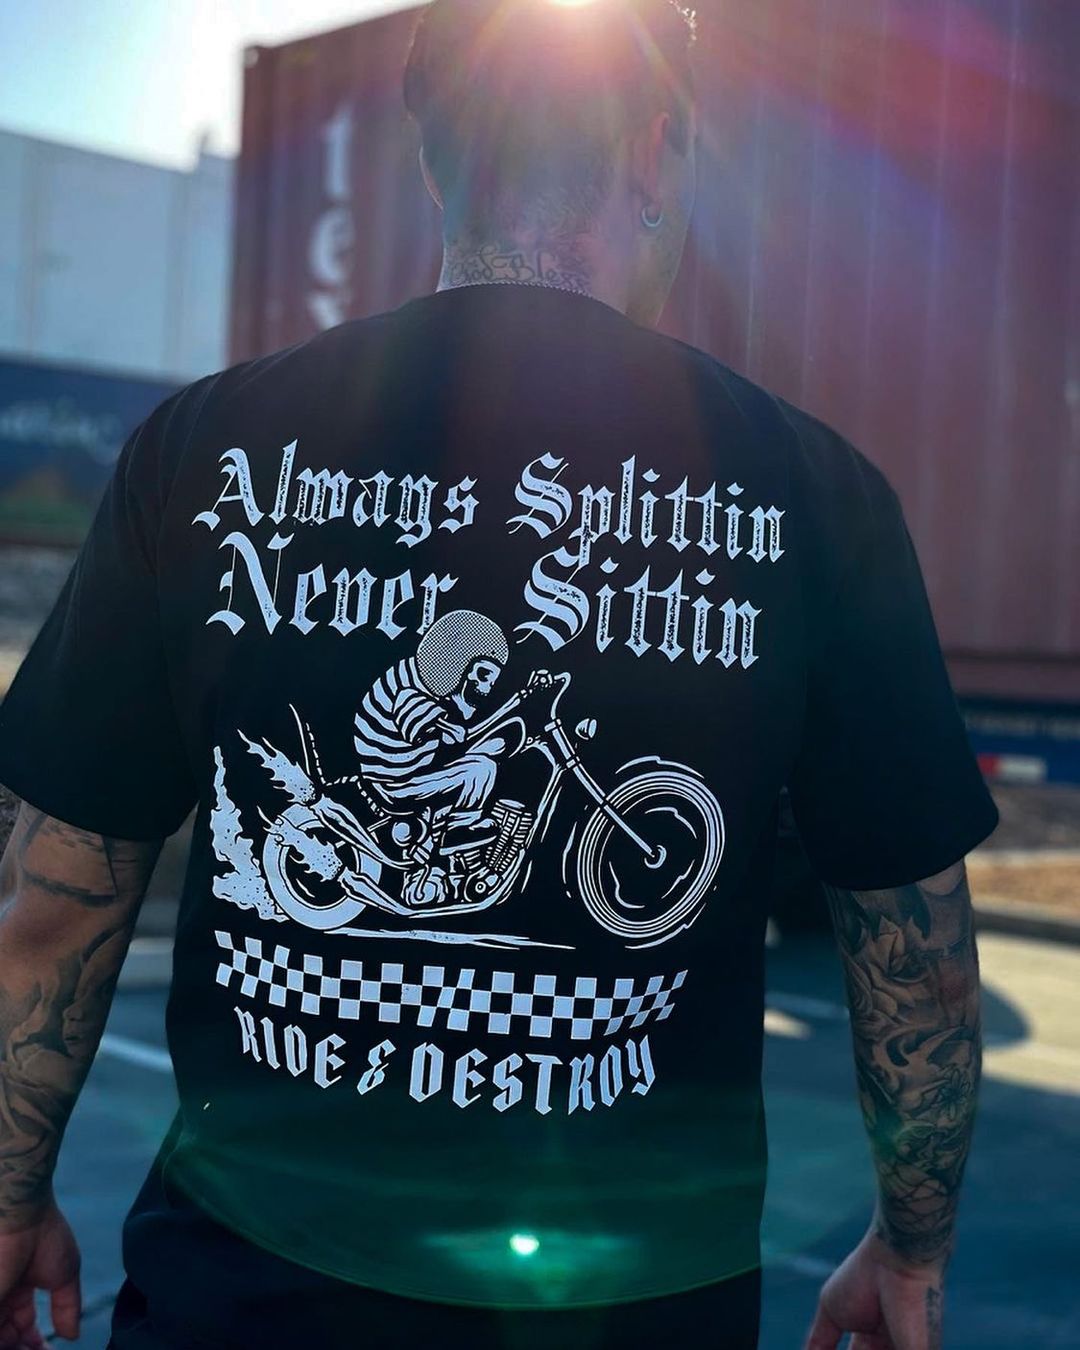 Ride & Destroy T-shirt